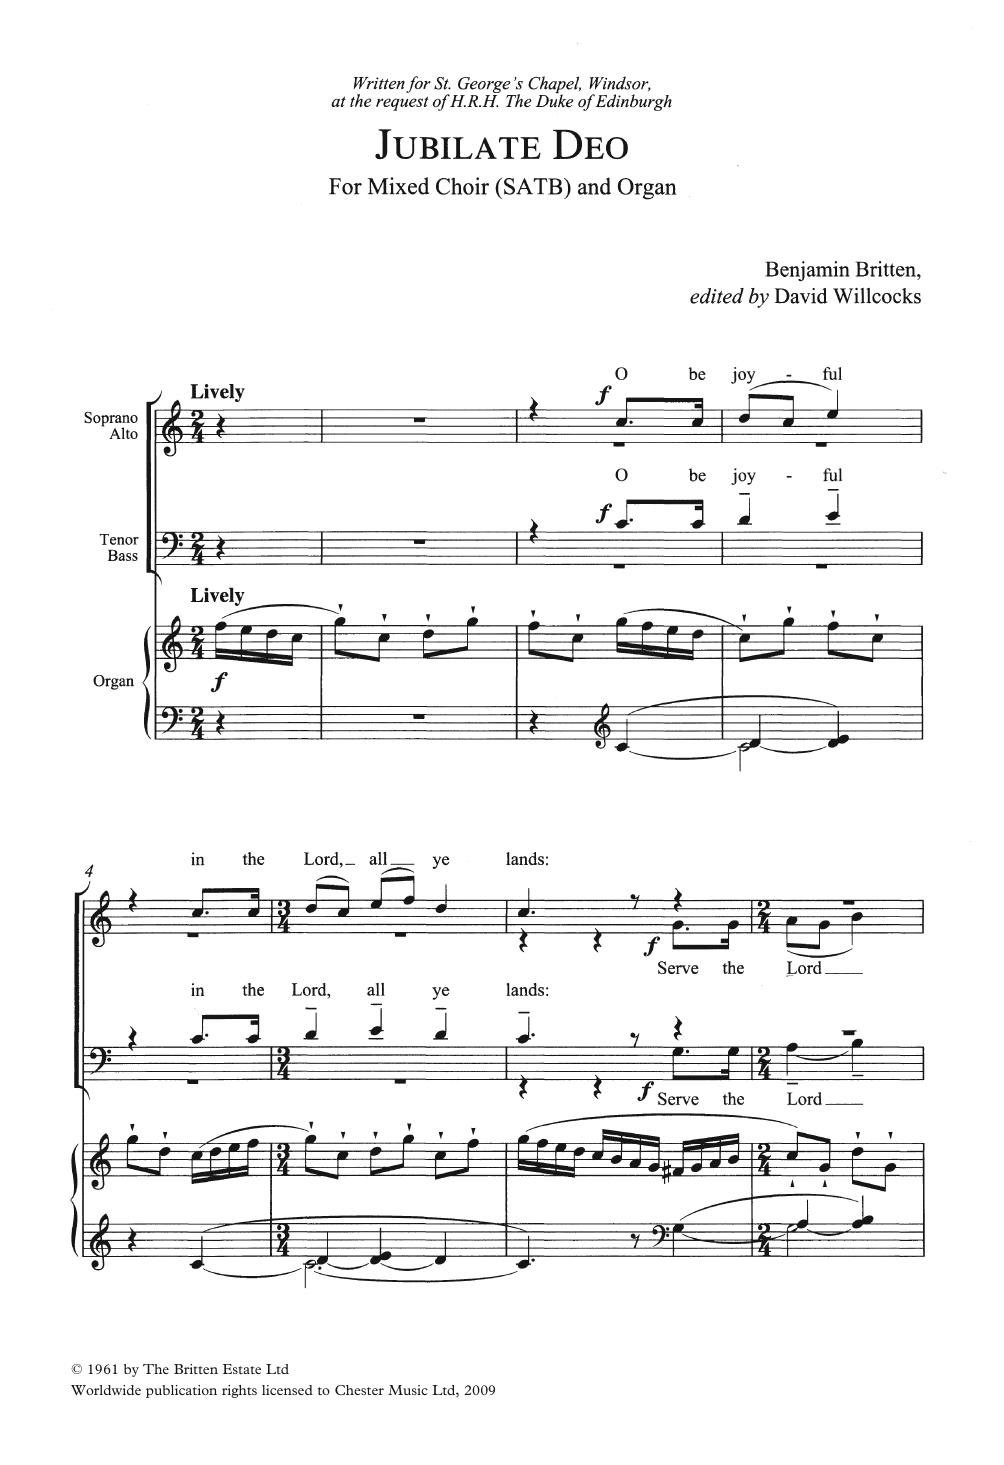 Benjamin Britten Jubilate Deo In C Major Sheet Music Notes & Chords for Choir - Download or Print PDF